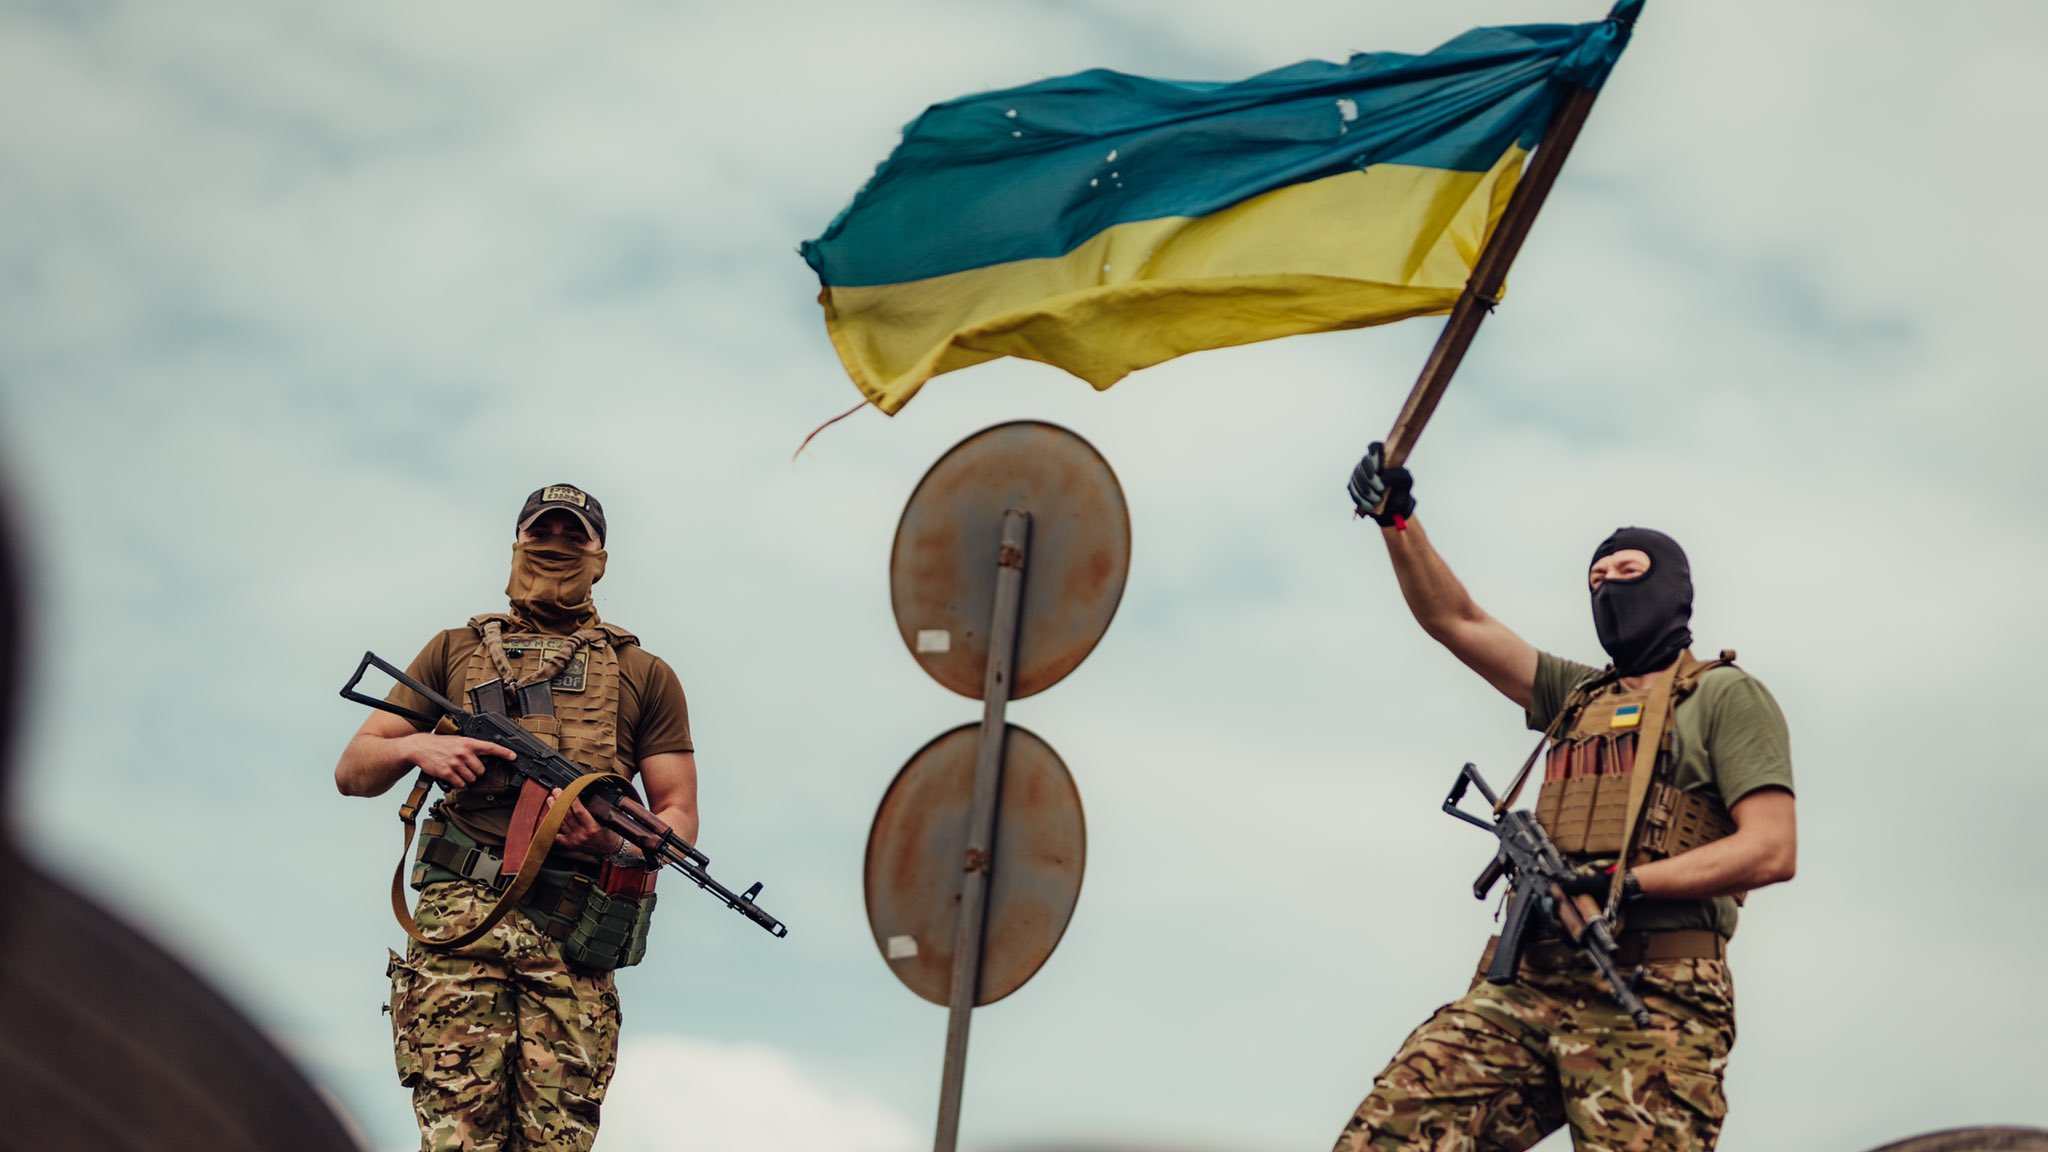 Photo: Ukrainian soldier flying a flag in celebration of Ukrainian Independence Day. Credit: Arsen Petrov via Twitter @ArsenPetrovAlex.